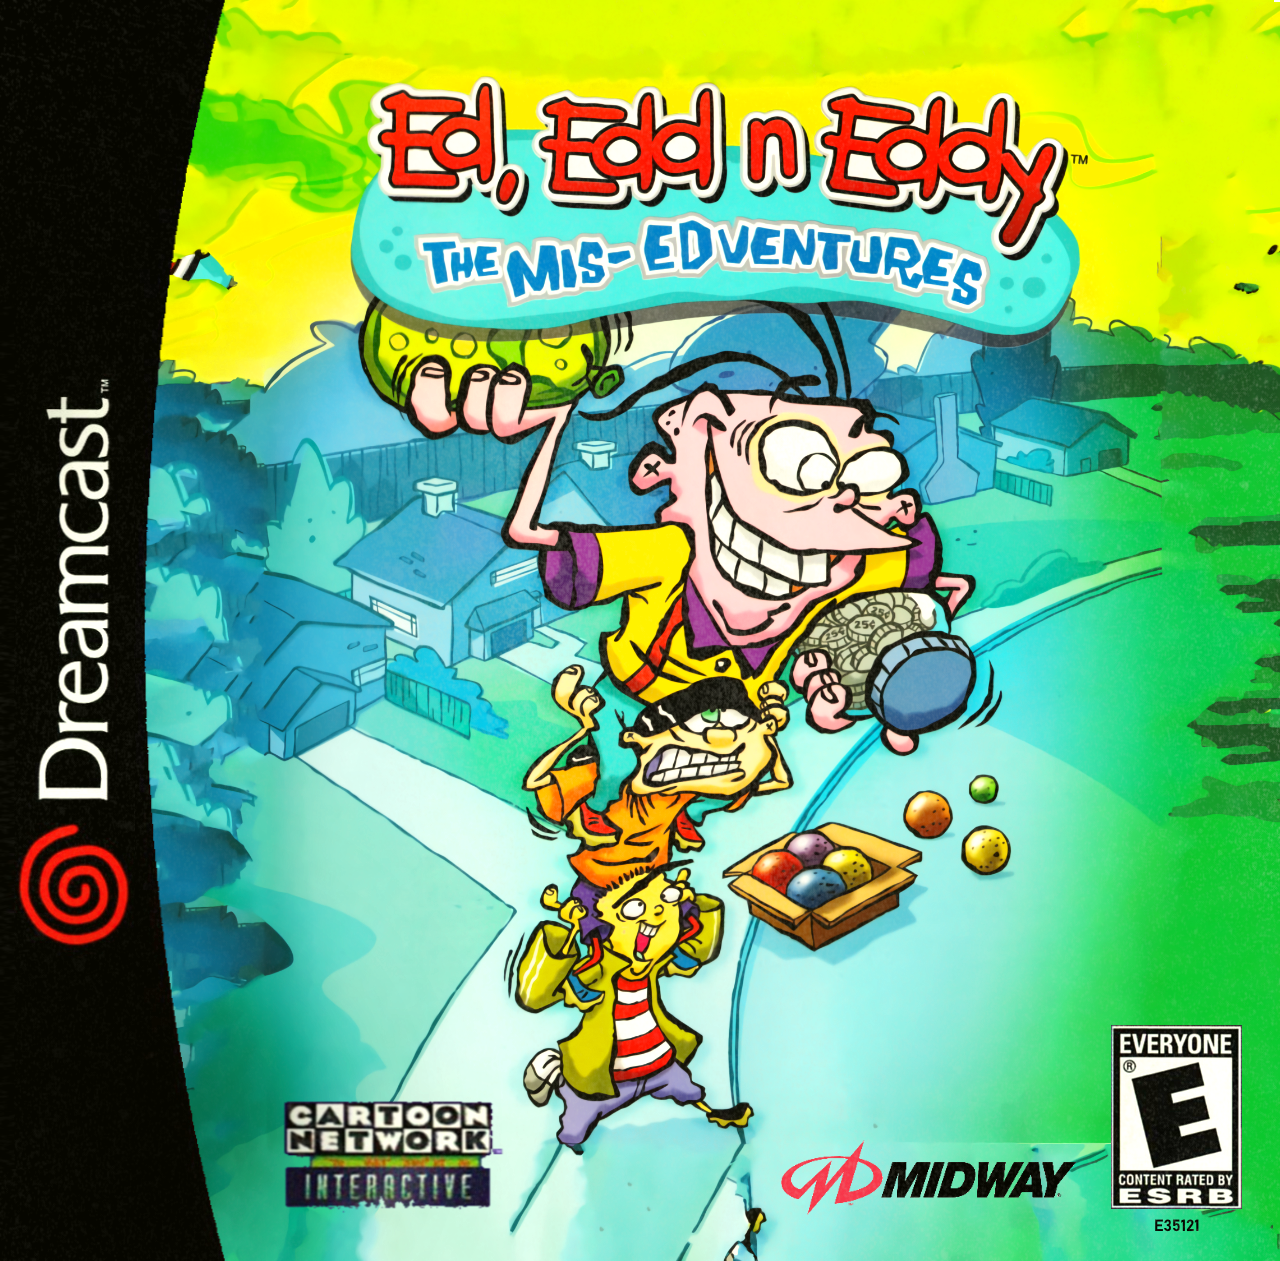 Ed, Edd n' Eddy: The Mis-EDventures - PS2 Gameplay Full HD